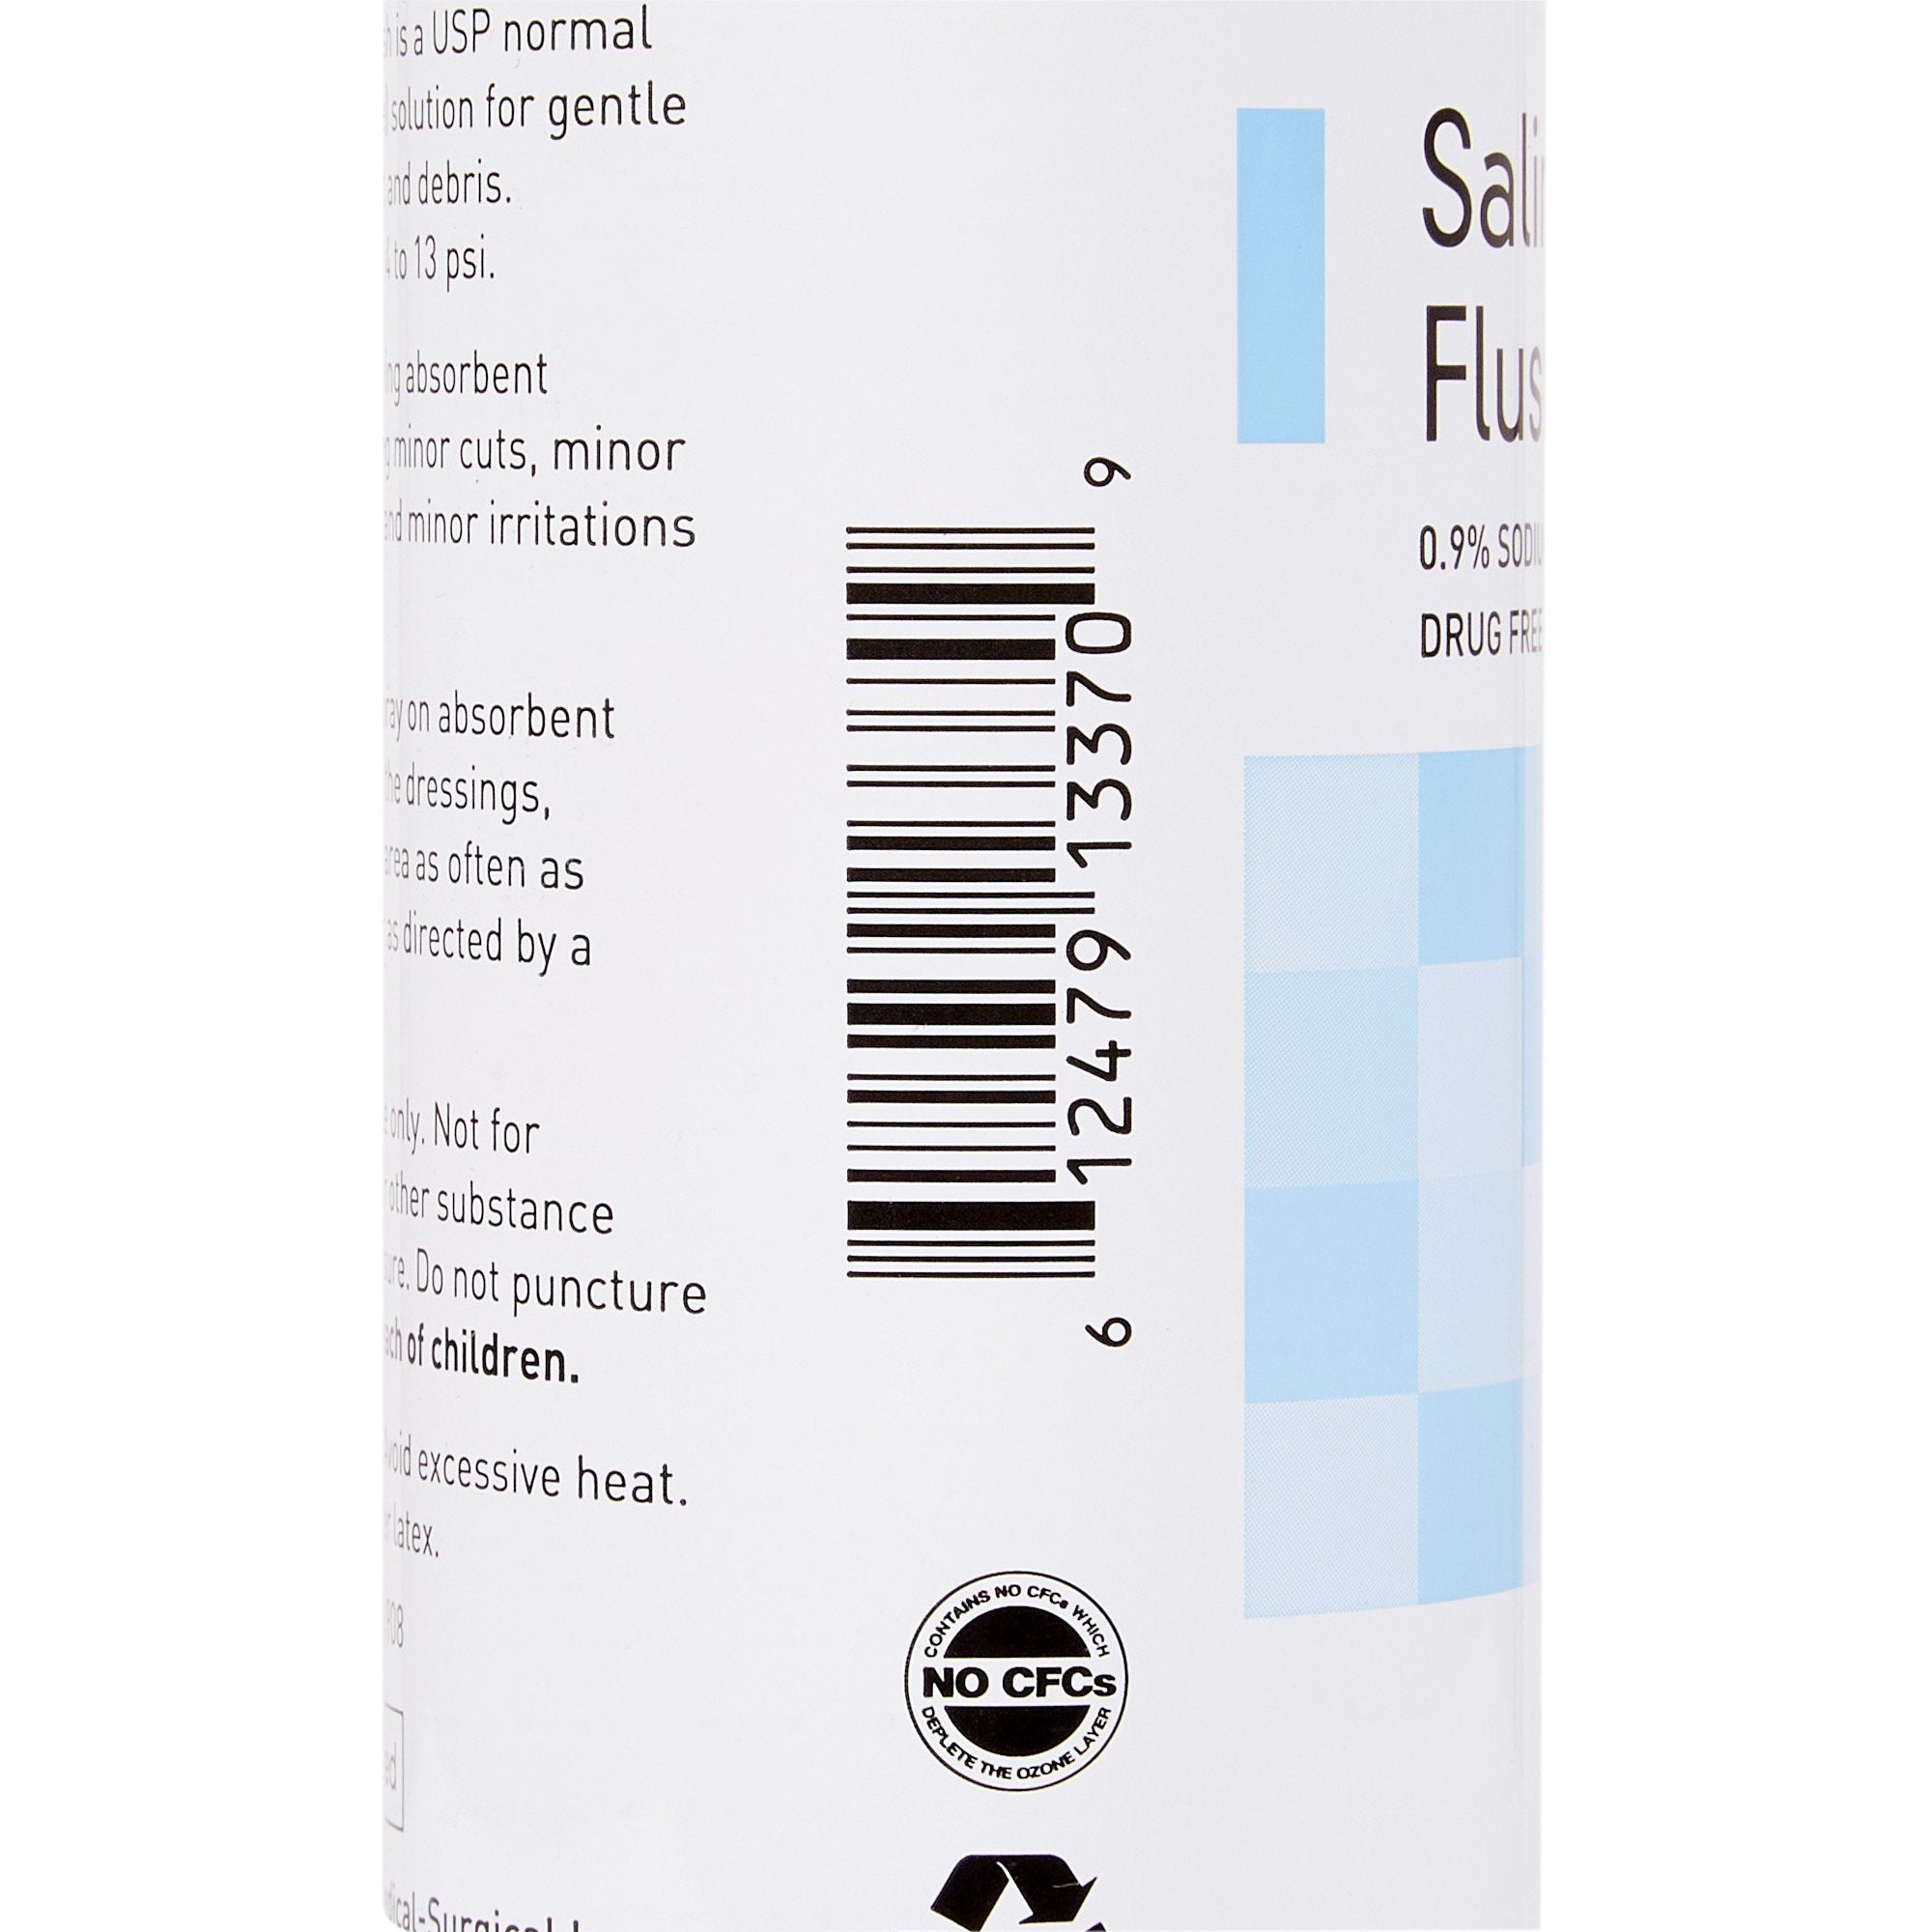 Wound Cleanser McKesson 7.1 oz. Spray Can Sterile